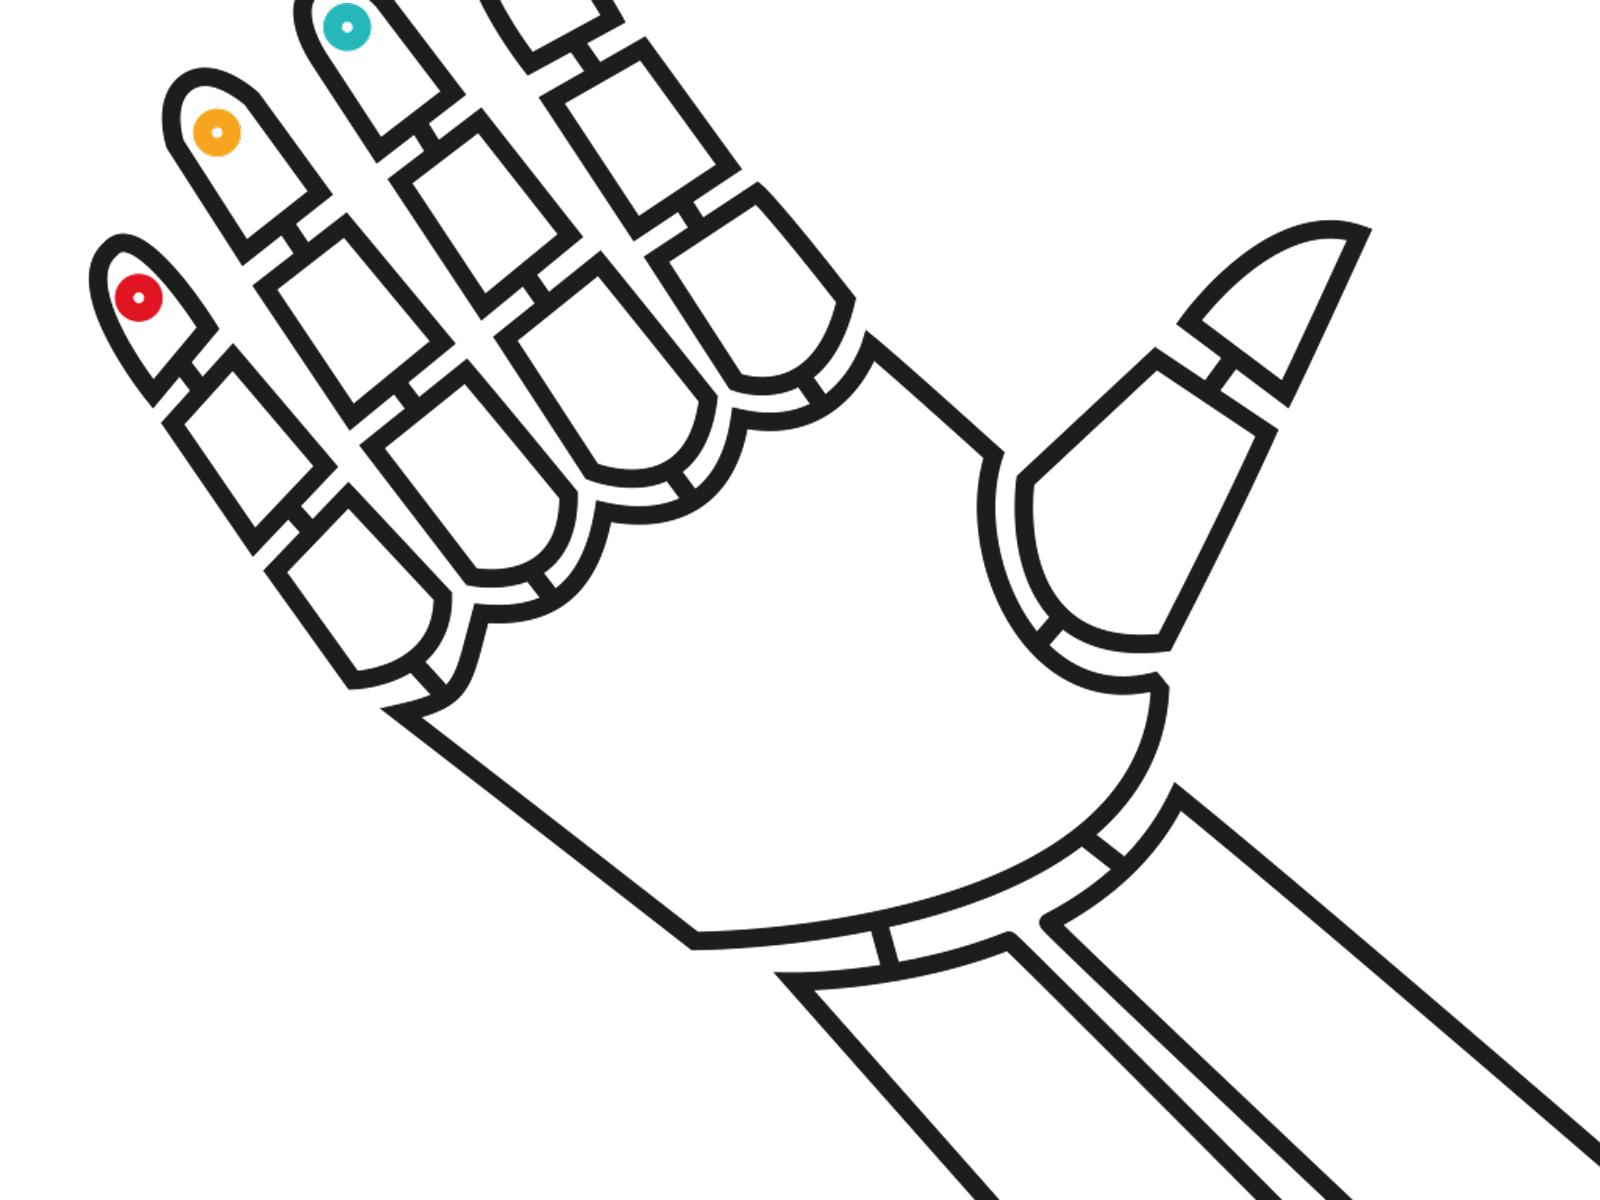 Robot arm and hand visual